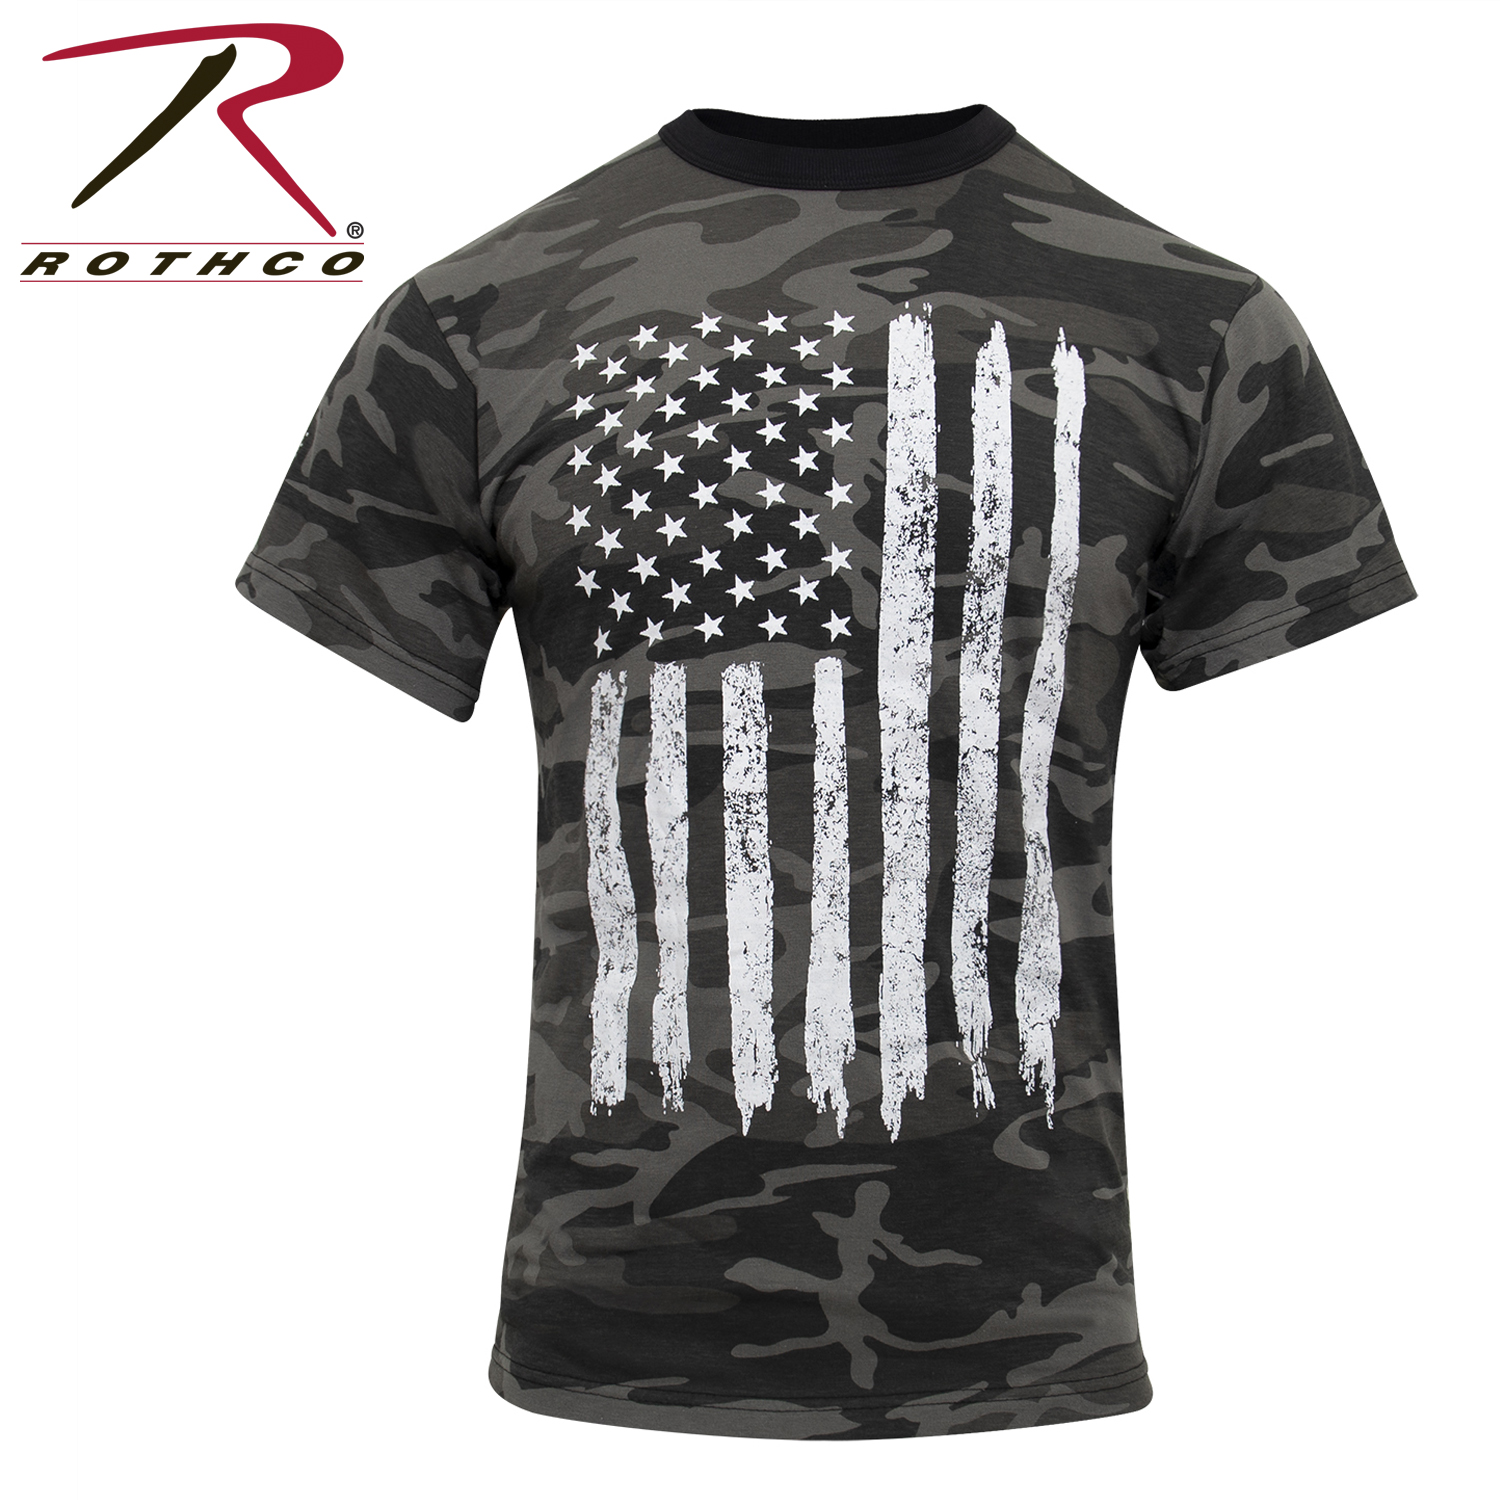 Rothco Camo US Flag T-Shirt - Black Camo